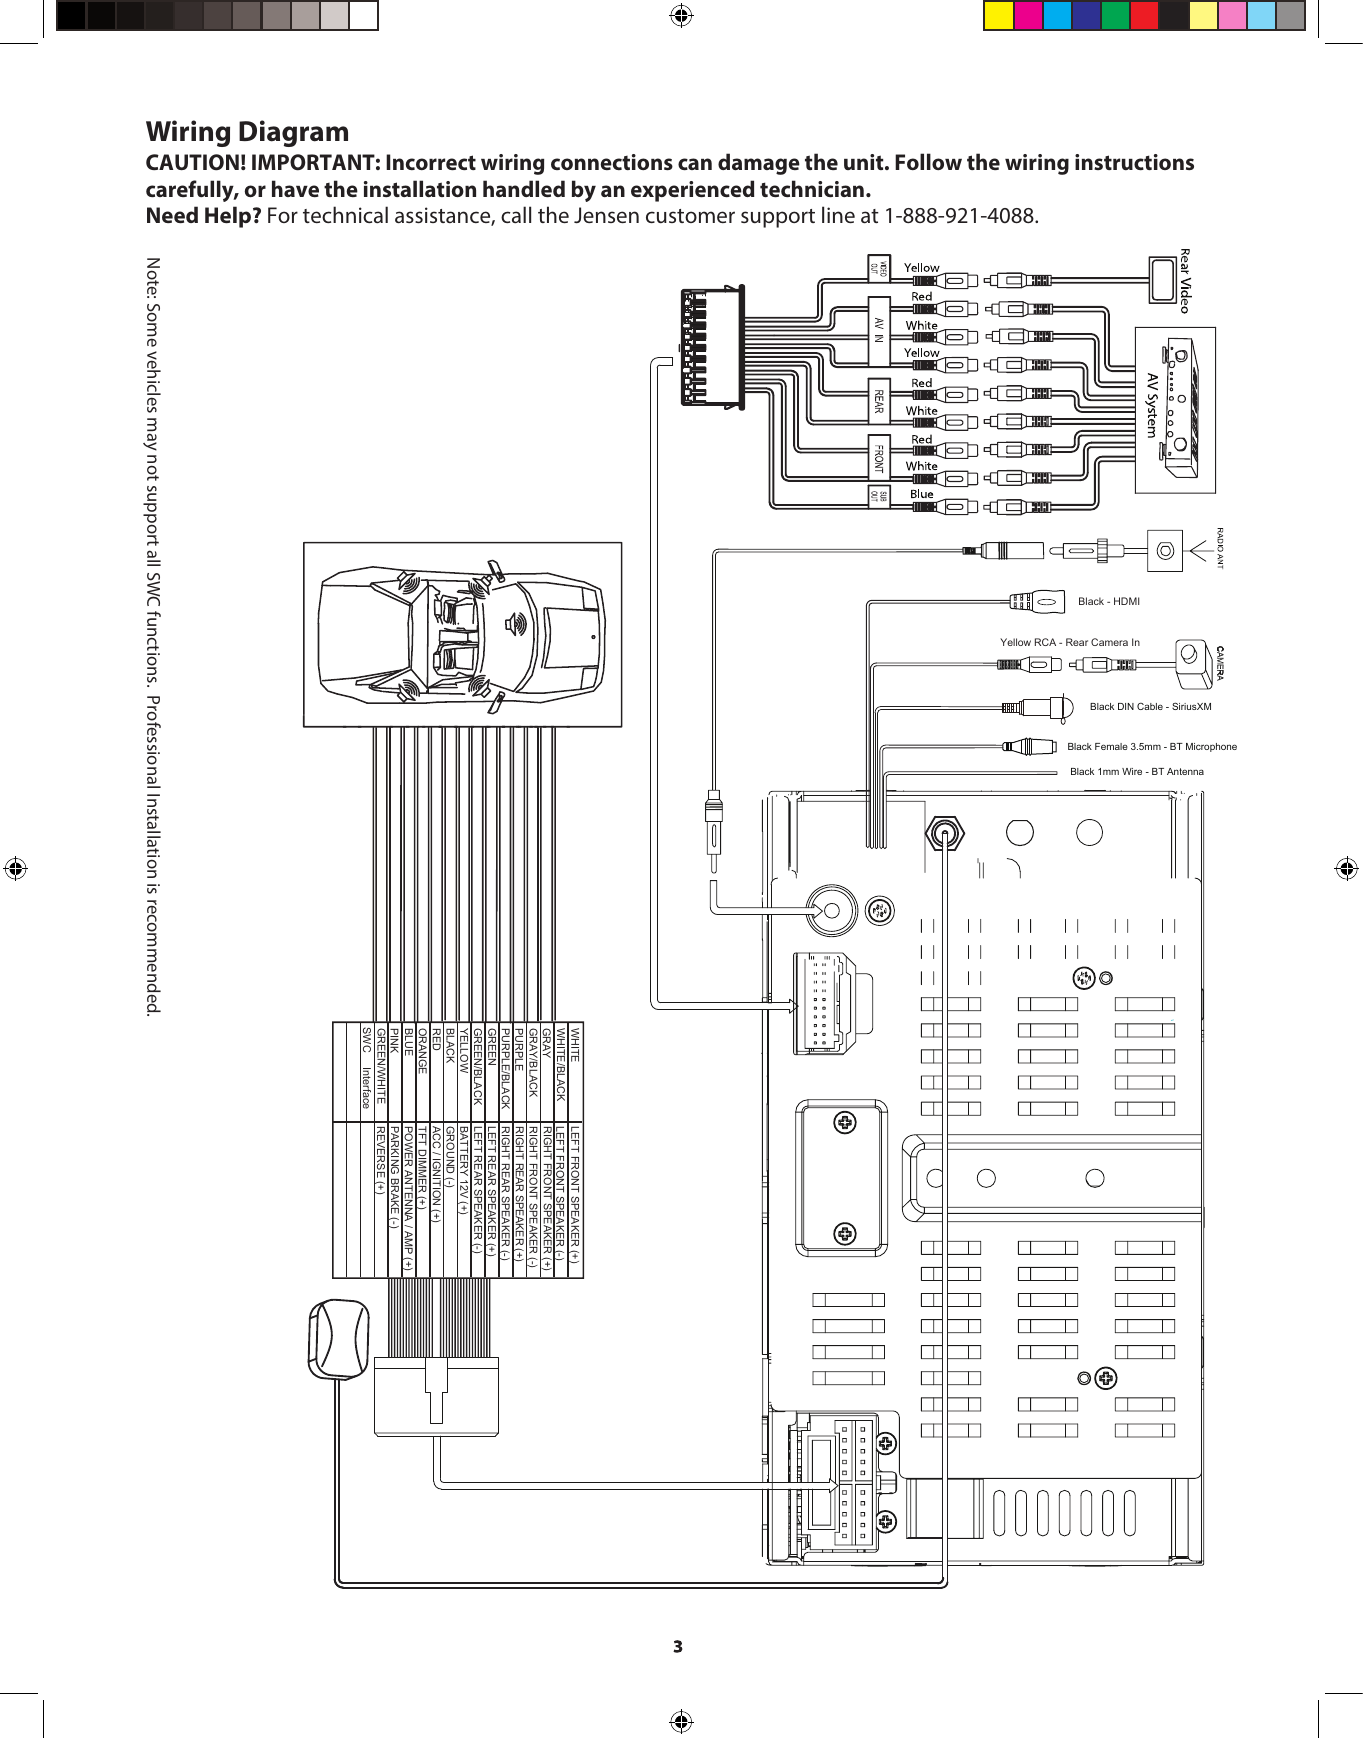 Page 3 of 4 - 未命名 -1 VX-7023 - Installation Guide VX7023 IM EN